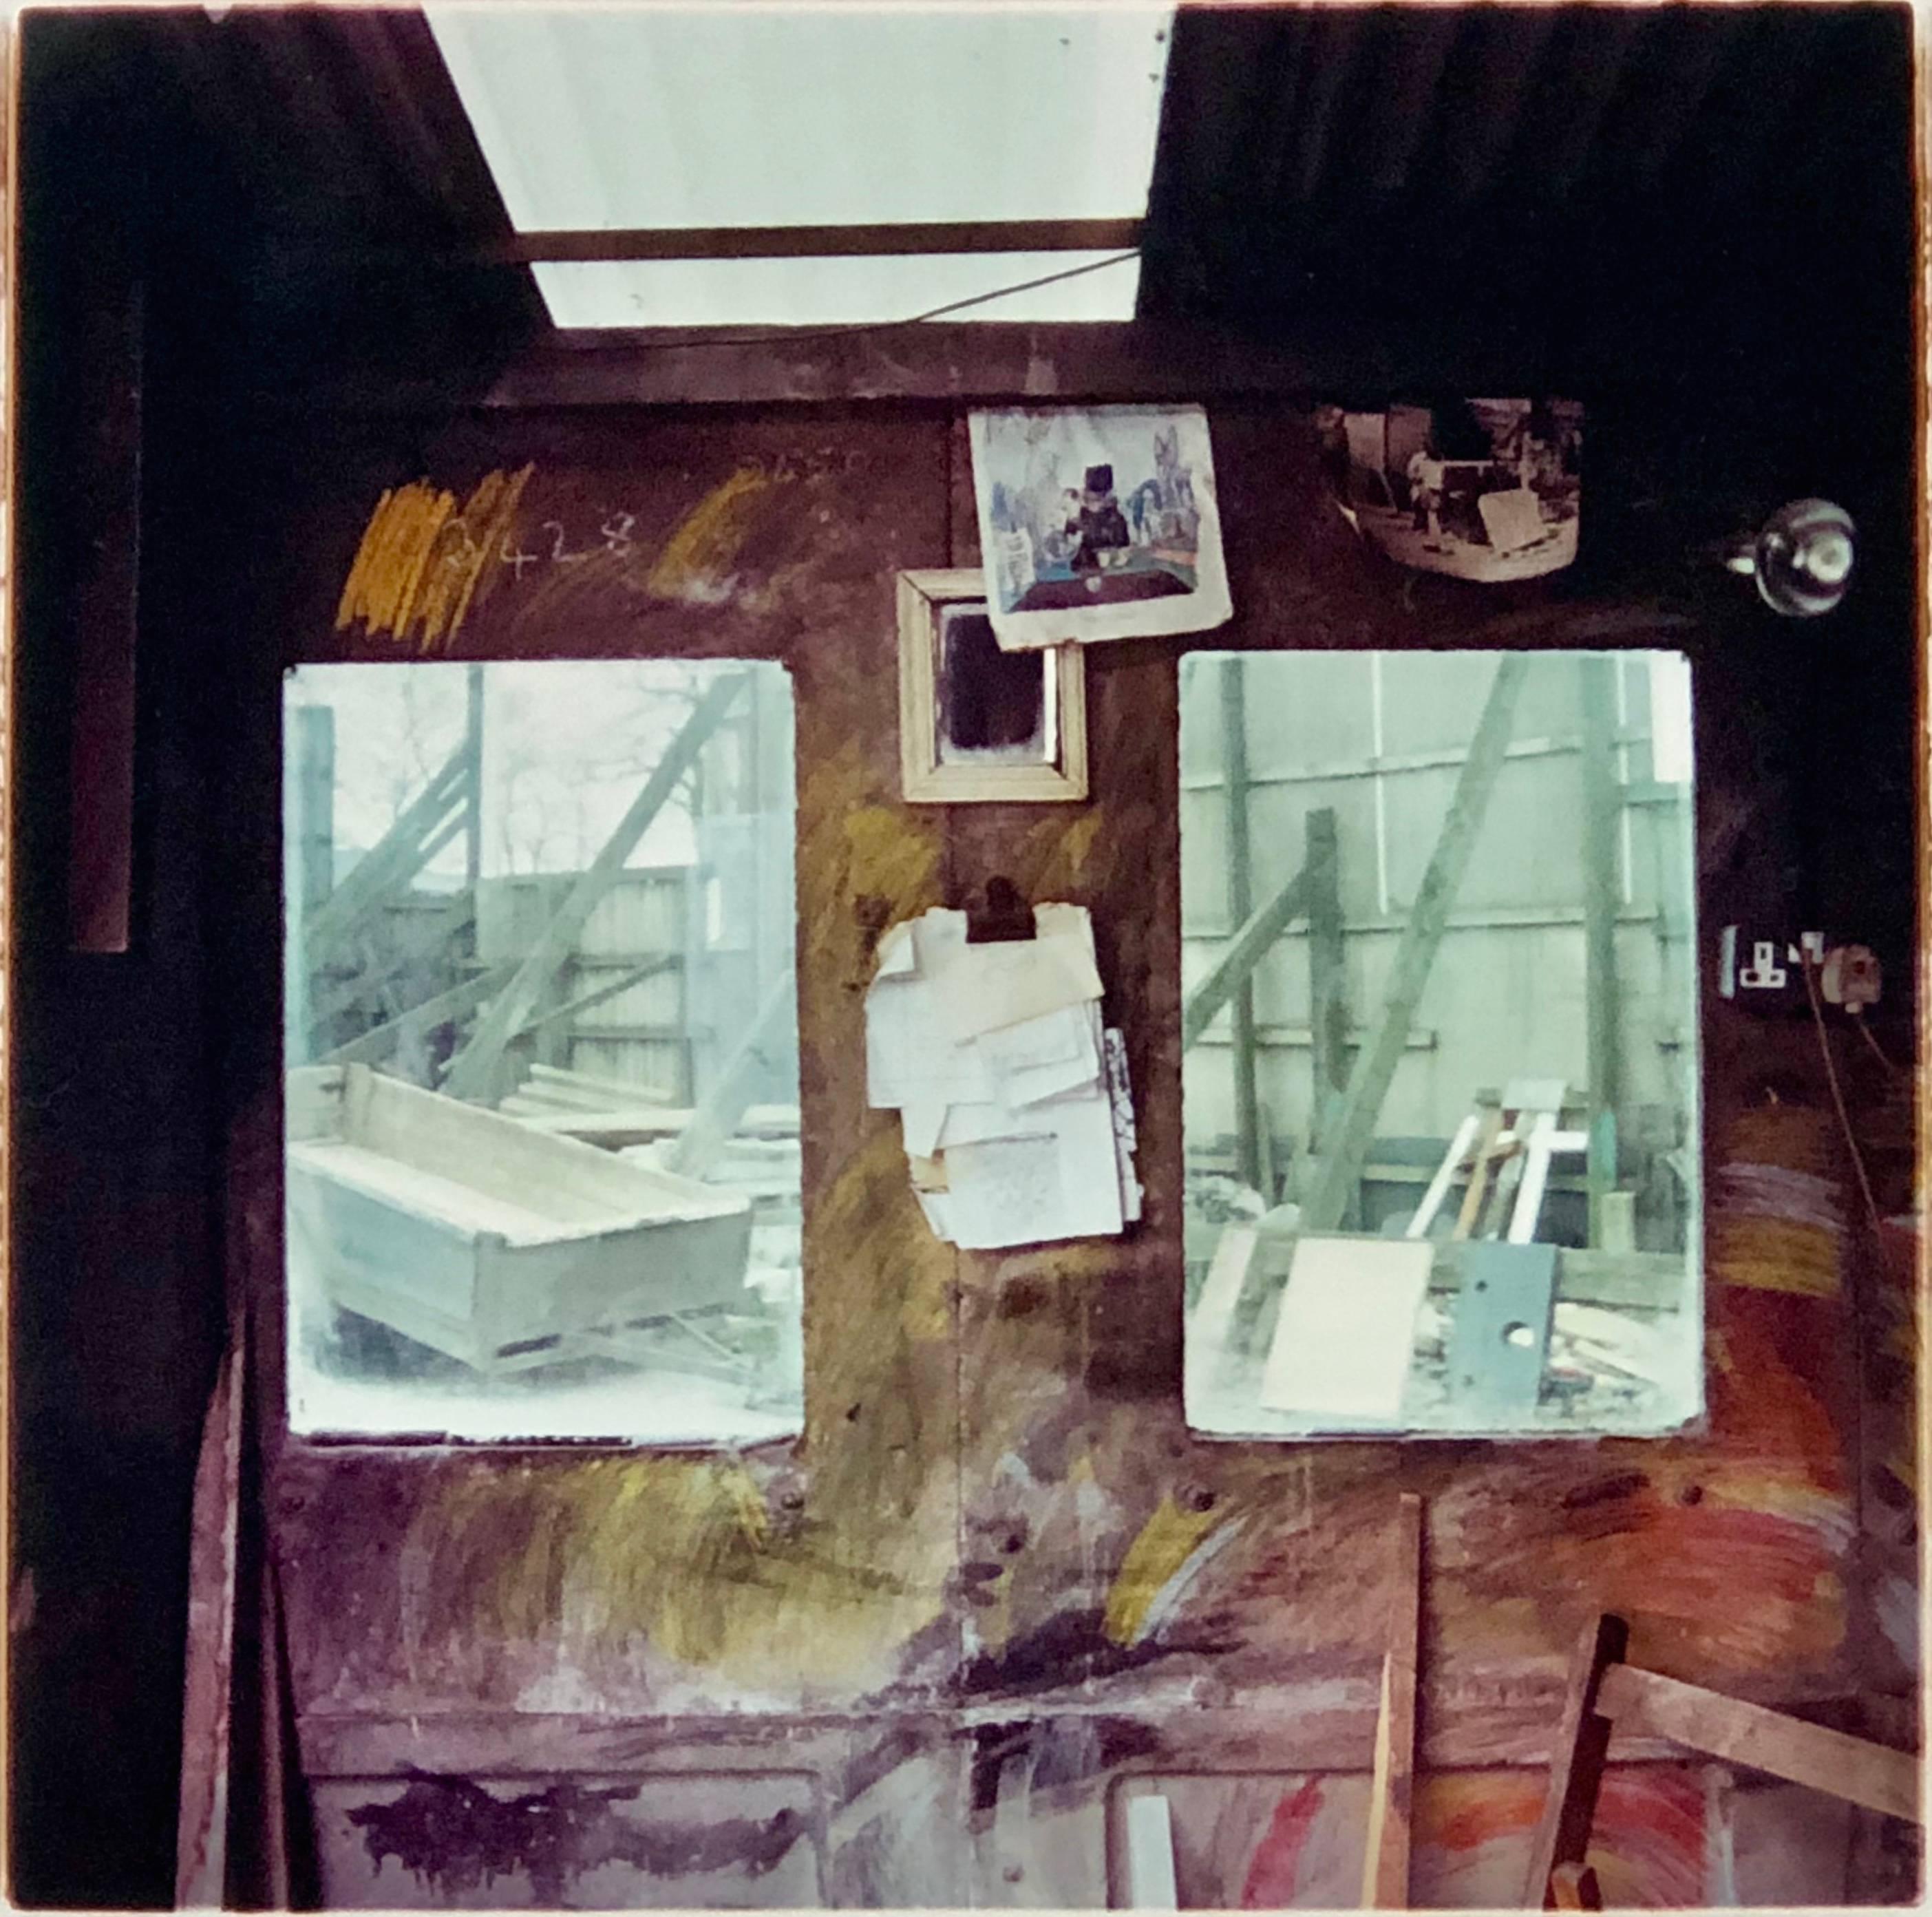 Richard Heeps Interior Print - Stonemason's Workshop, Northwich - British industrial interior color photography